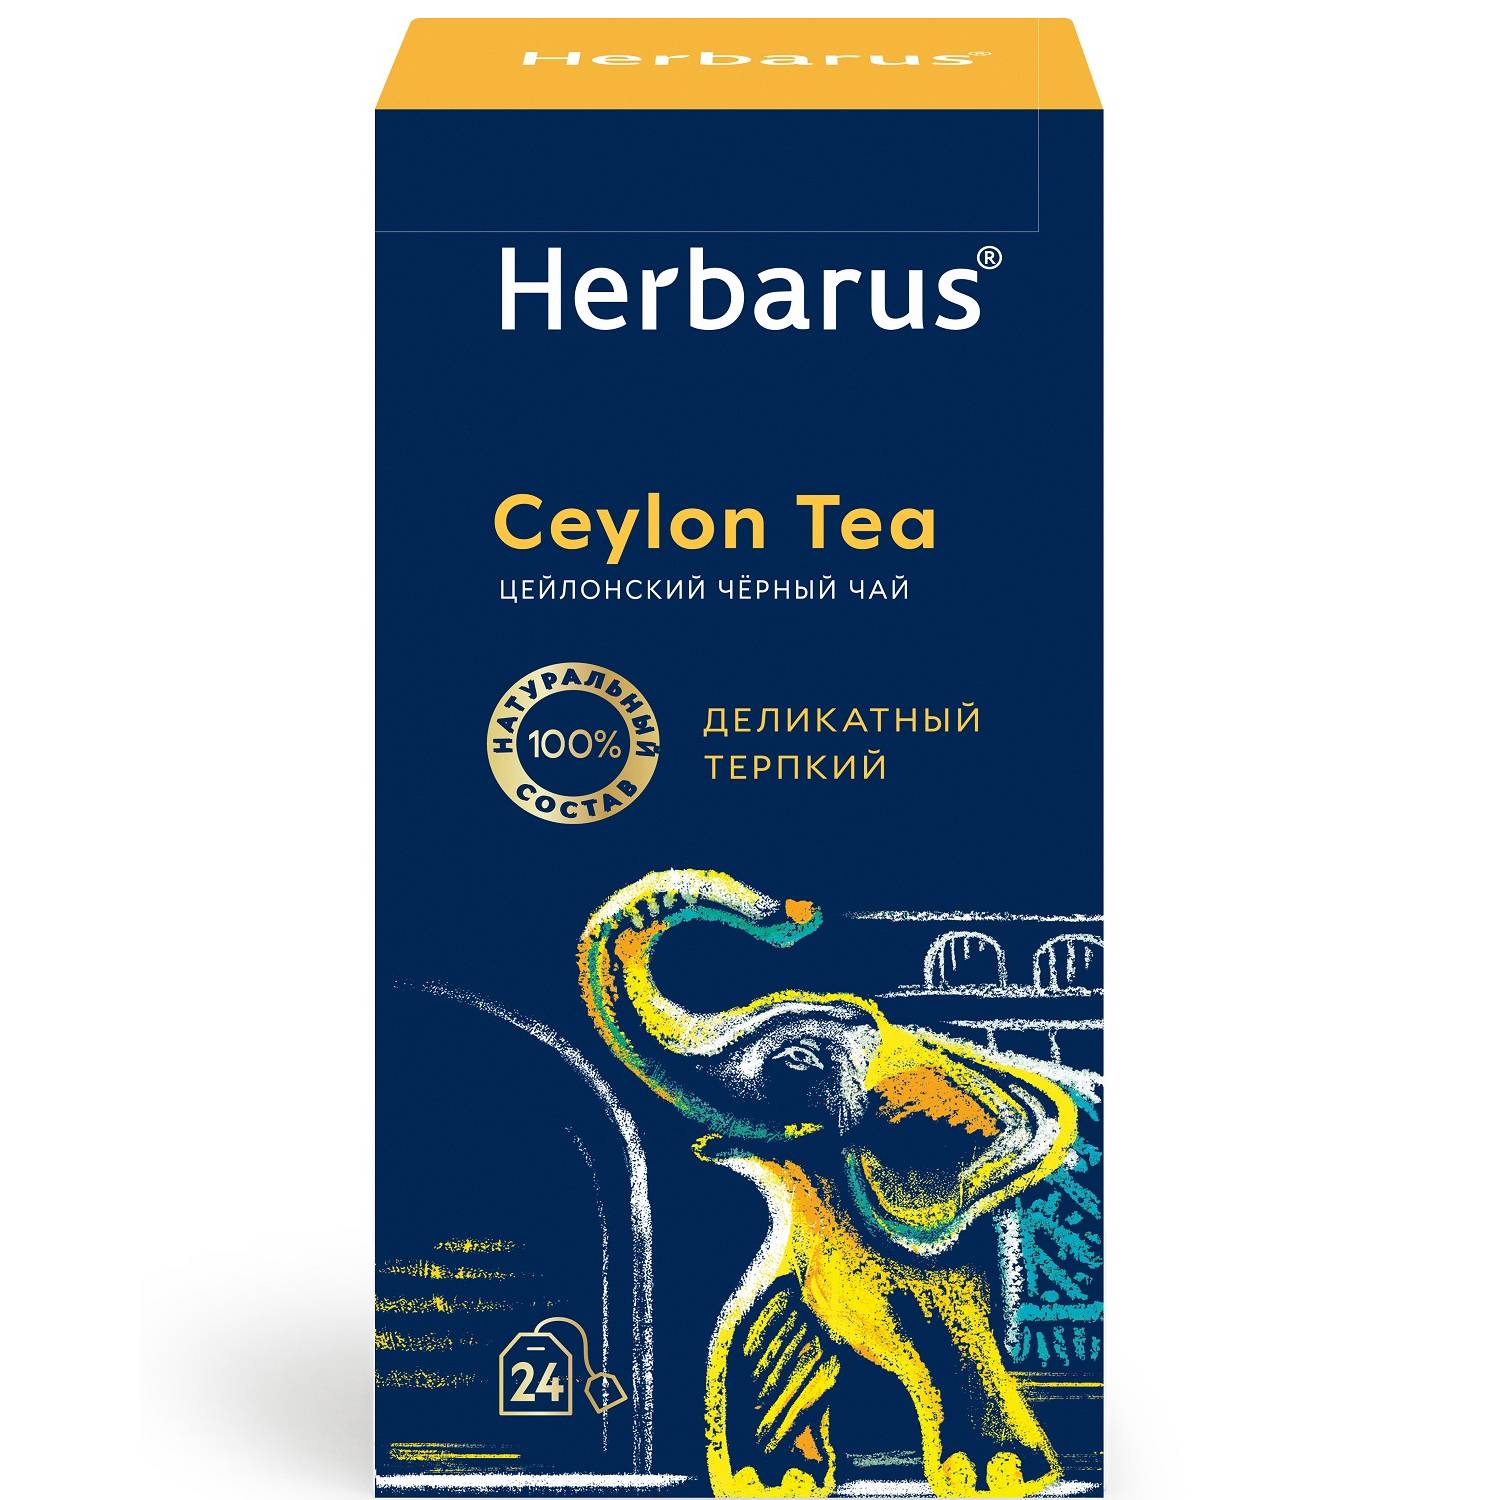 Herbarus Цейлонский черный чай Ceylon Tea, 24 пакетика х 2 г (Herbarus, Классический чай) herbarus чай черный с добавками дикий терпкий 24 х 2 г herbarus чай с добавками